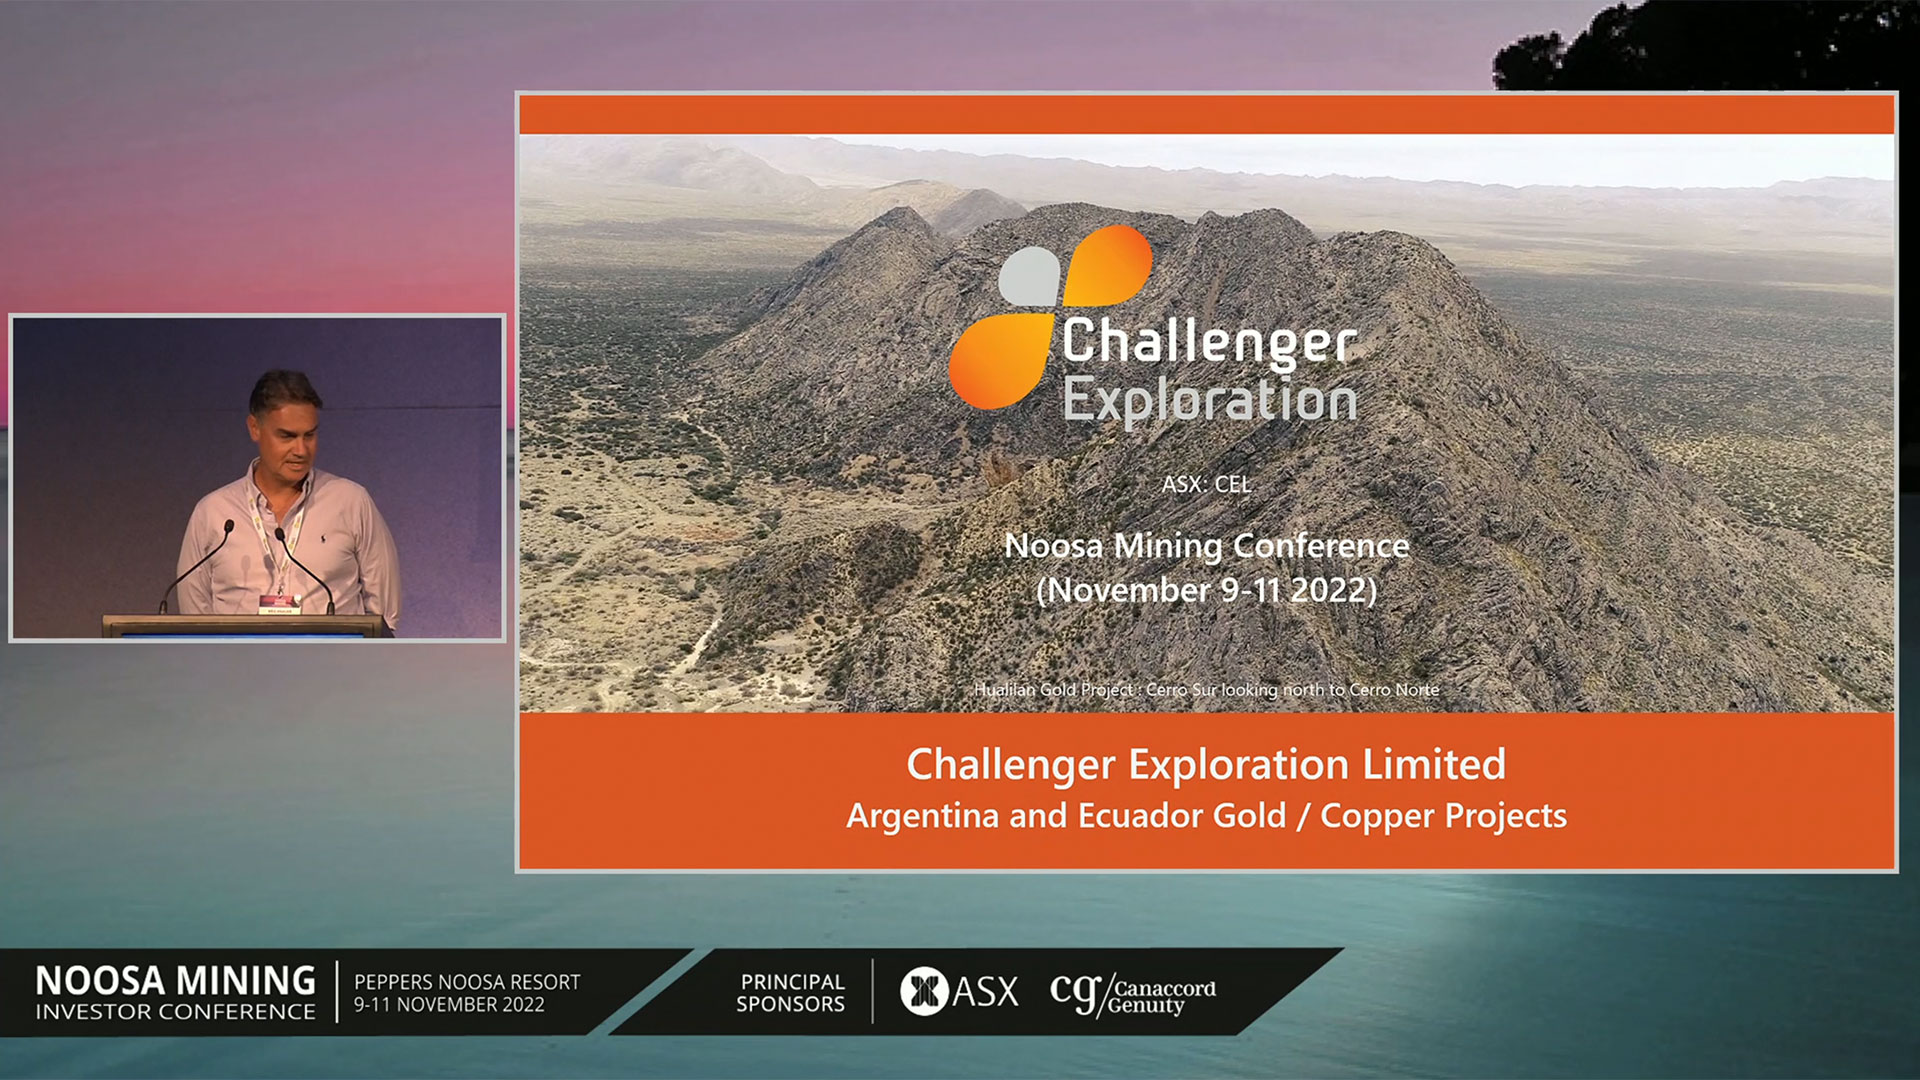 Kris Knauer’s Presentation at Noosa Mining Conference